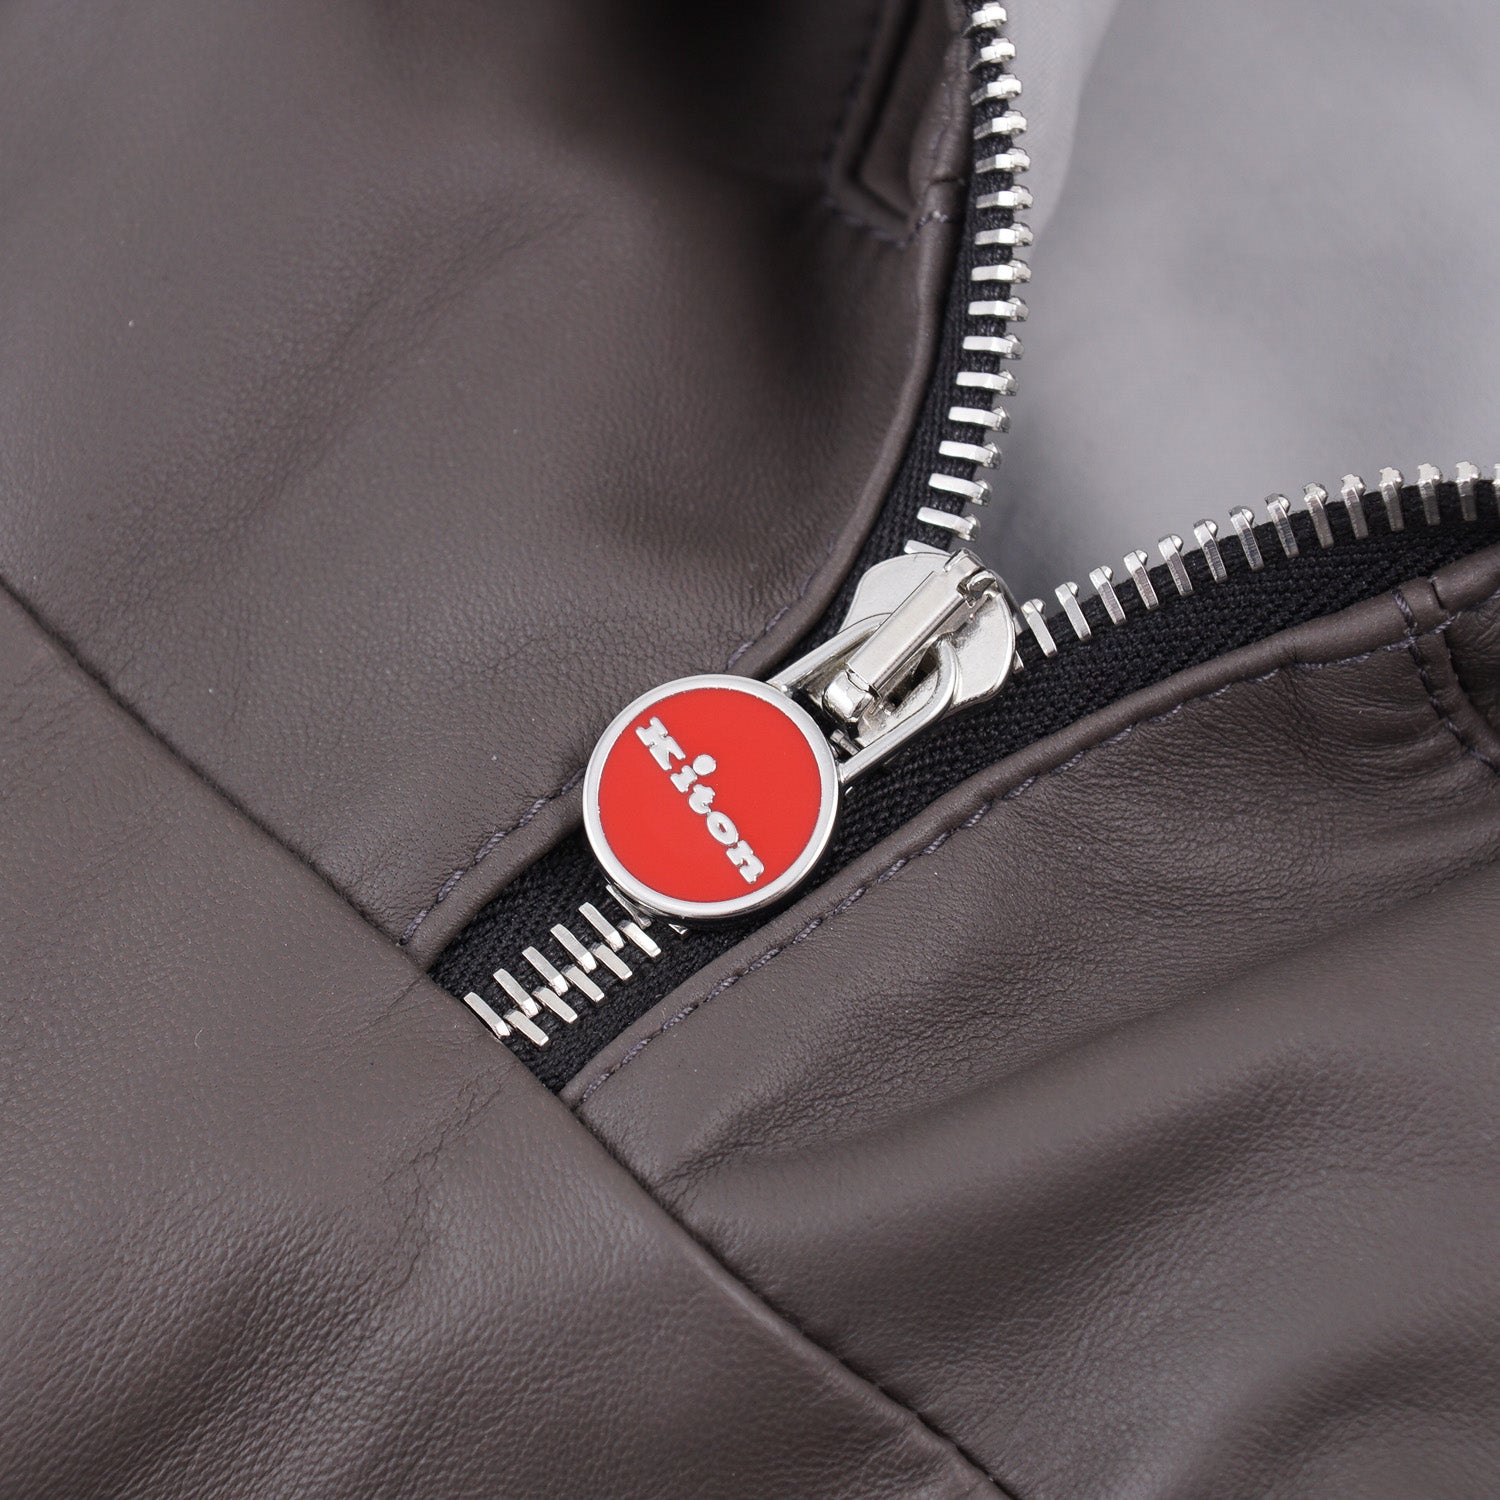 Kiton Hooded Lambskin Leather Jacket - Top Shelf Apparel